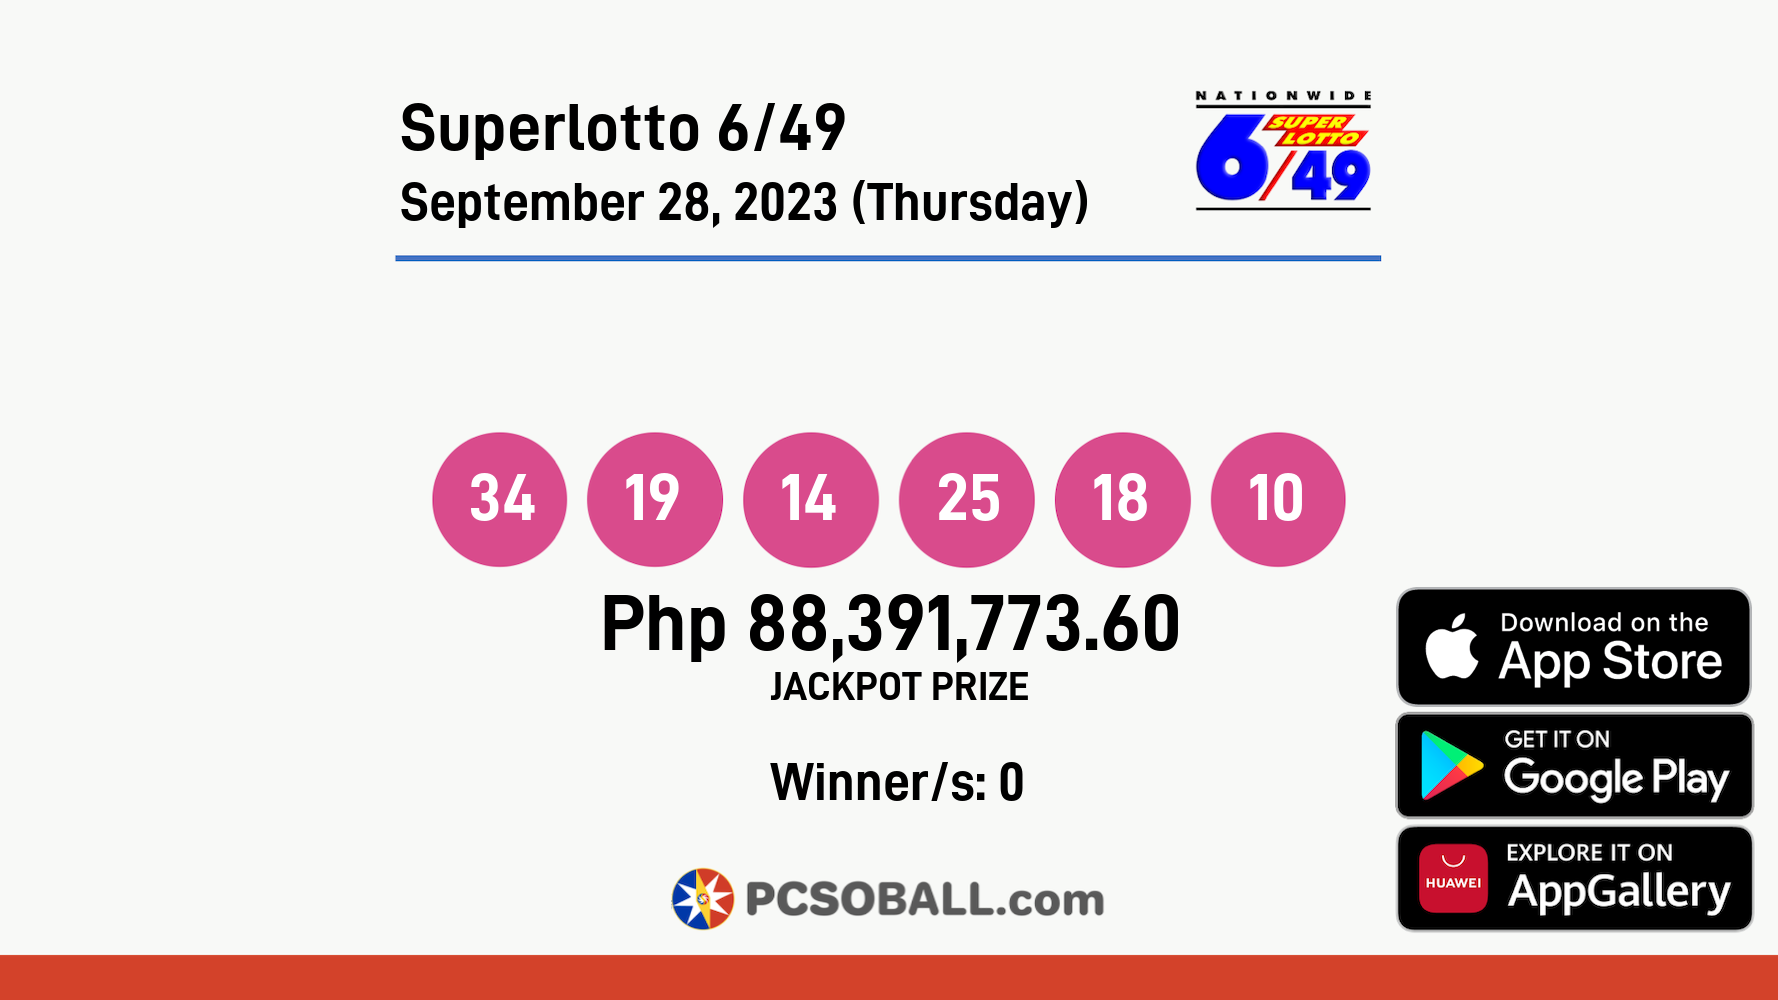 Superlotto 6/49 September 28, 2023 (Thursday) Result